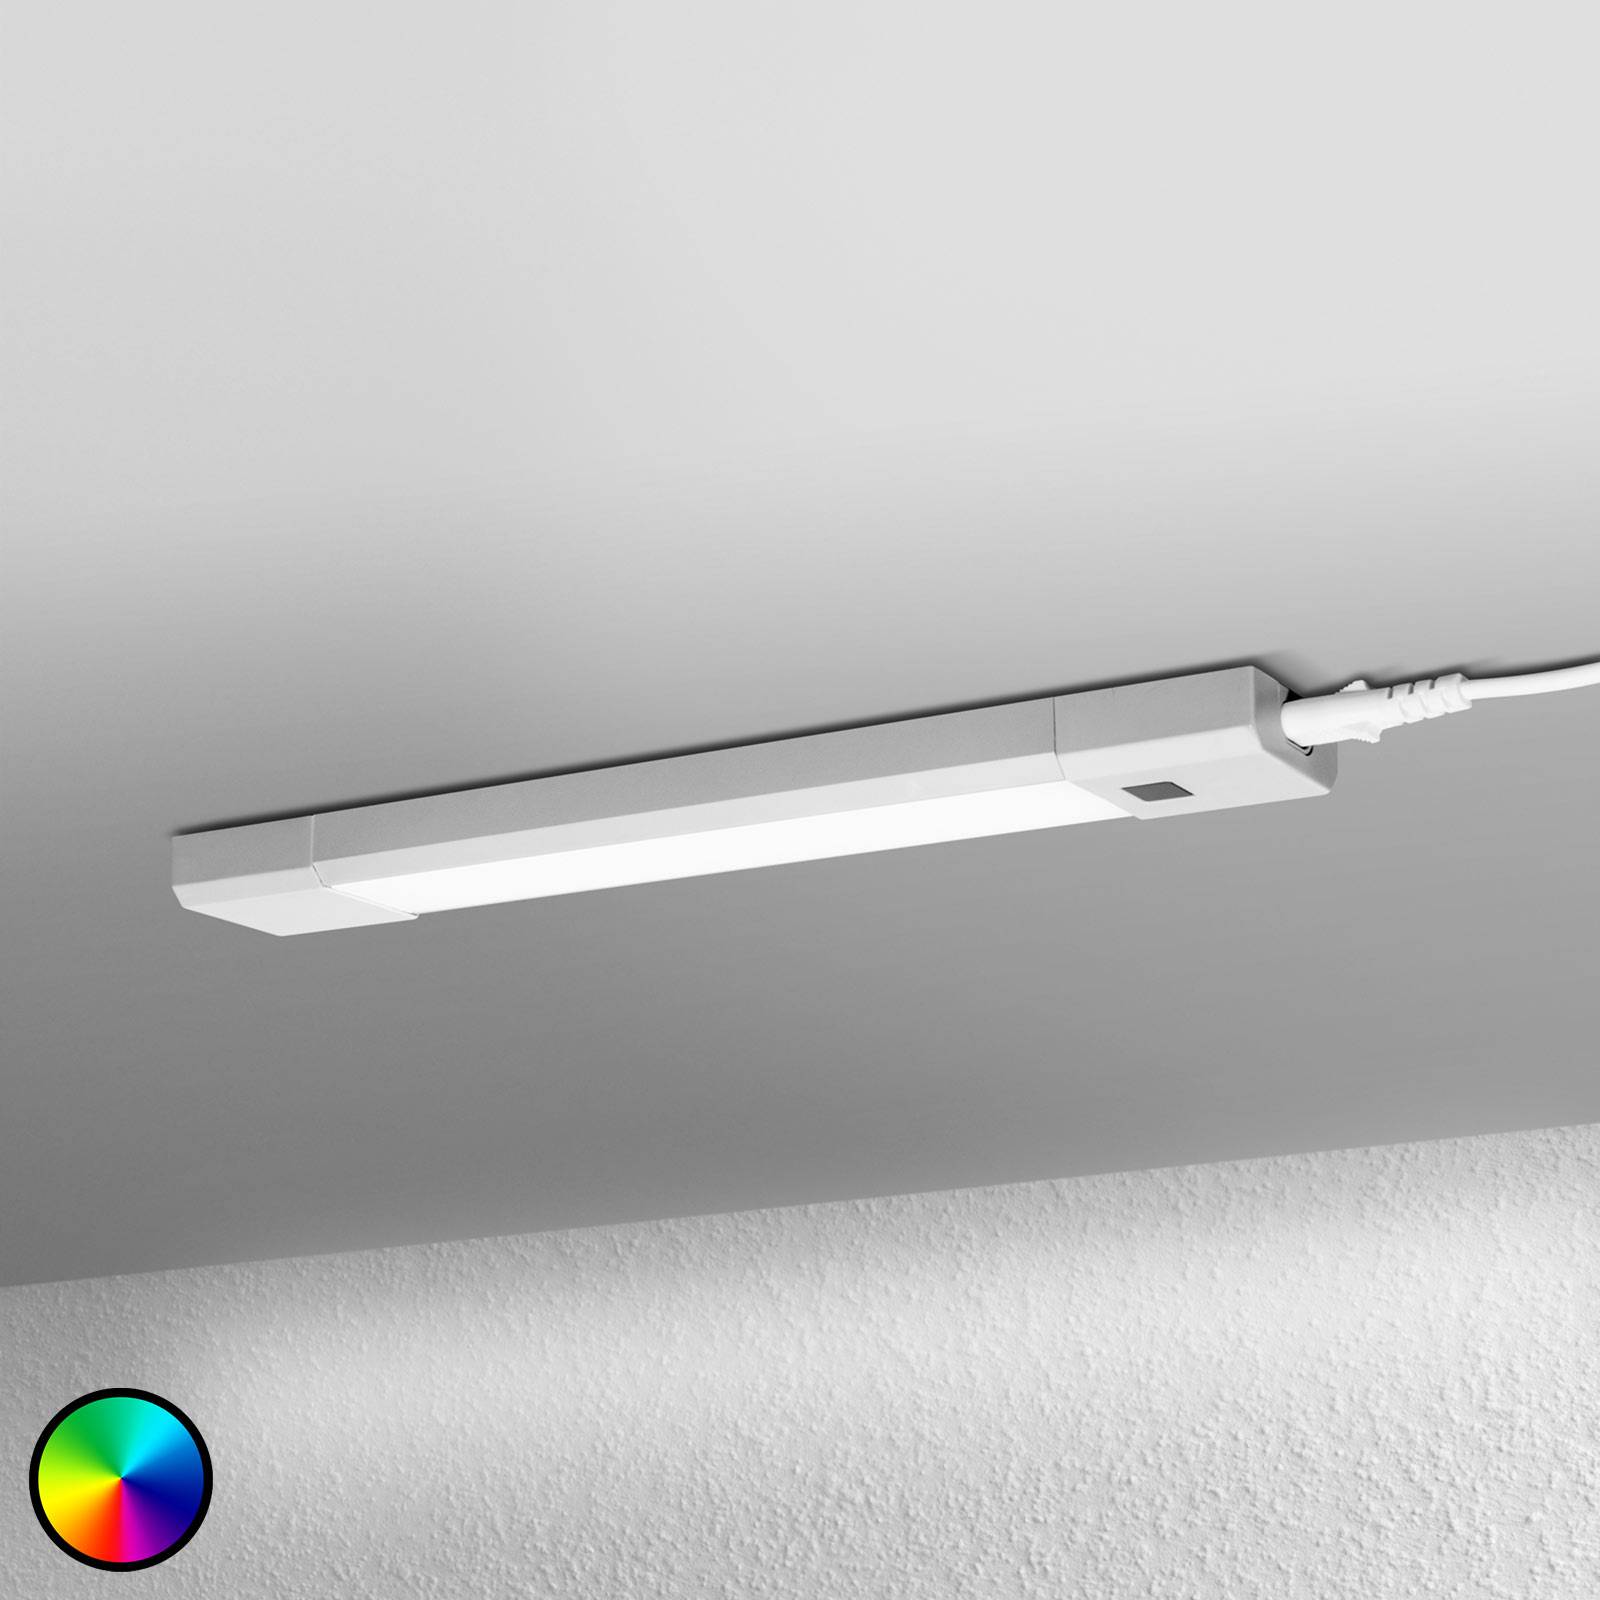 LEDVANCE Linear Slim RGBW Unterschranklampe 30cm